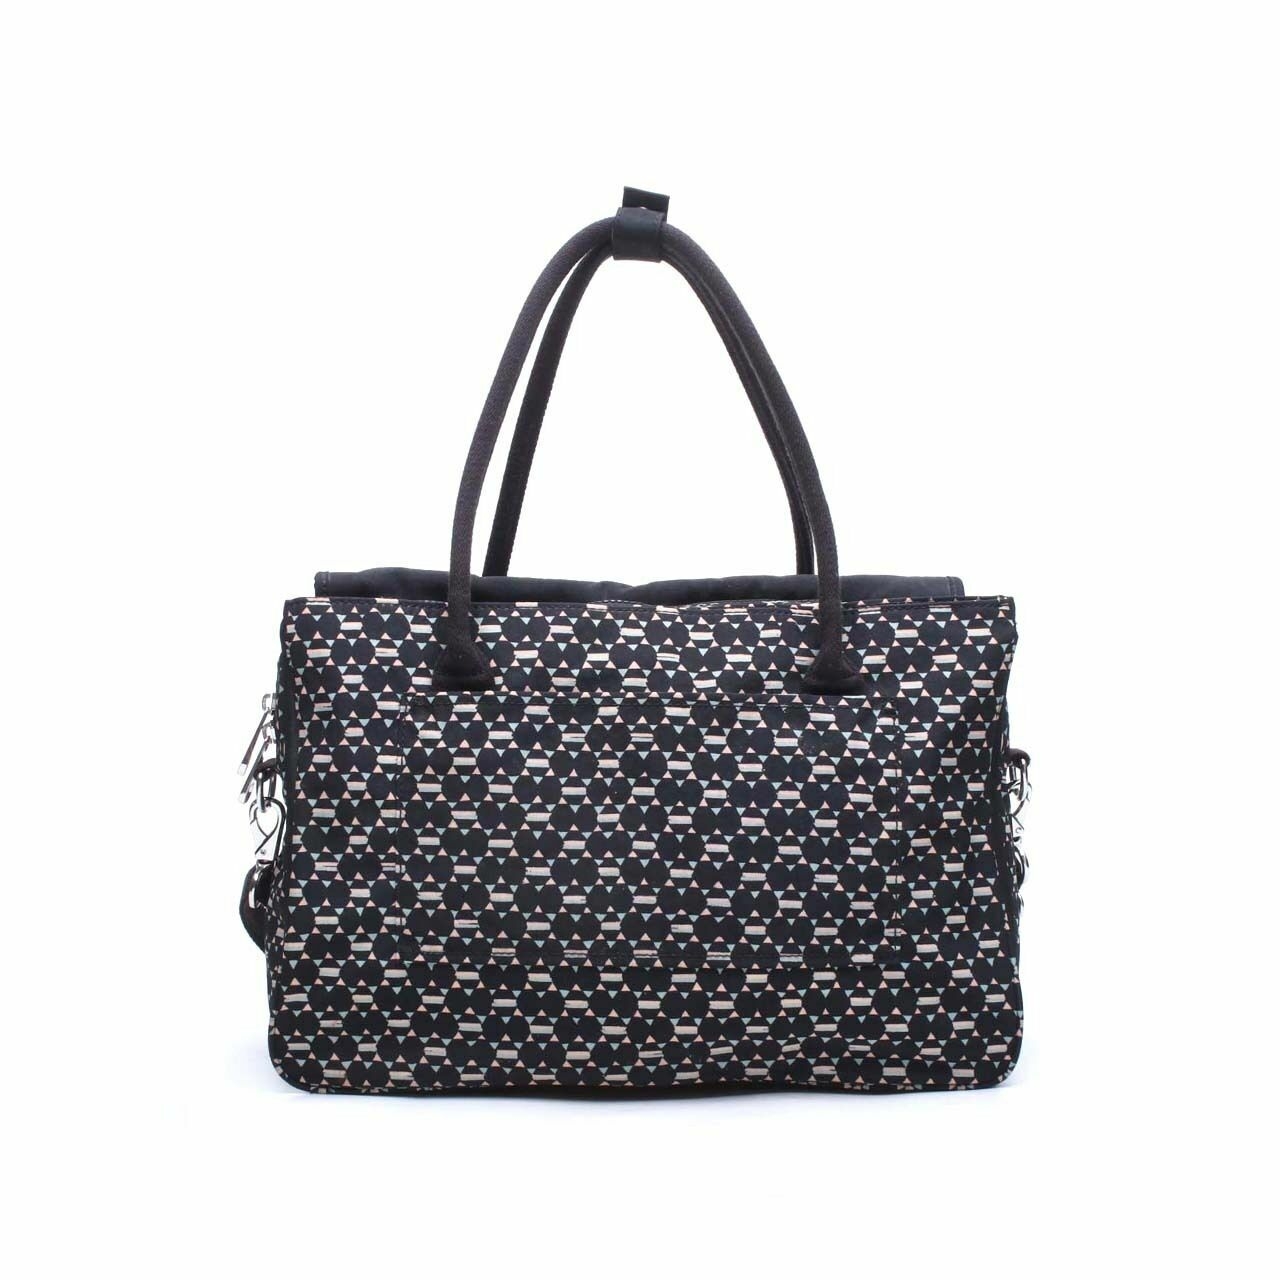 Kipling Black Pattern Satchel Bag